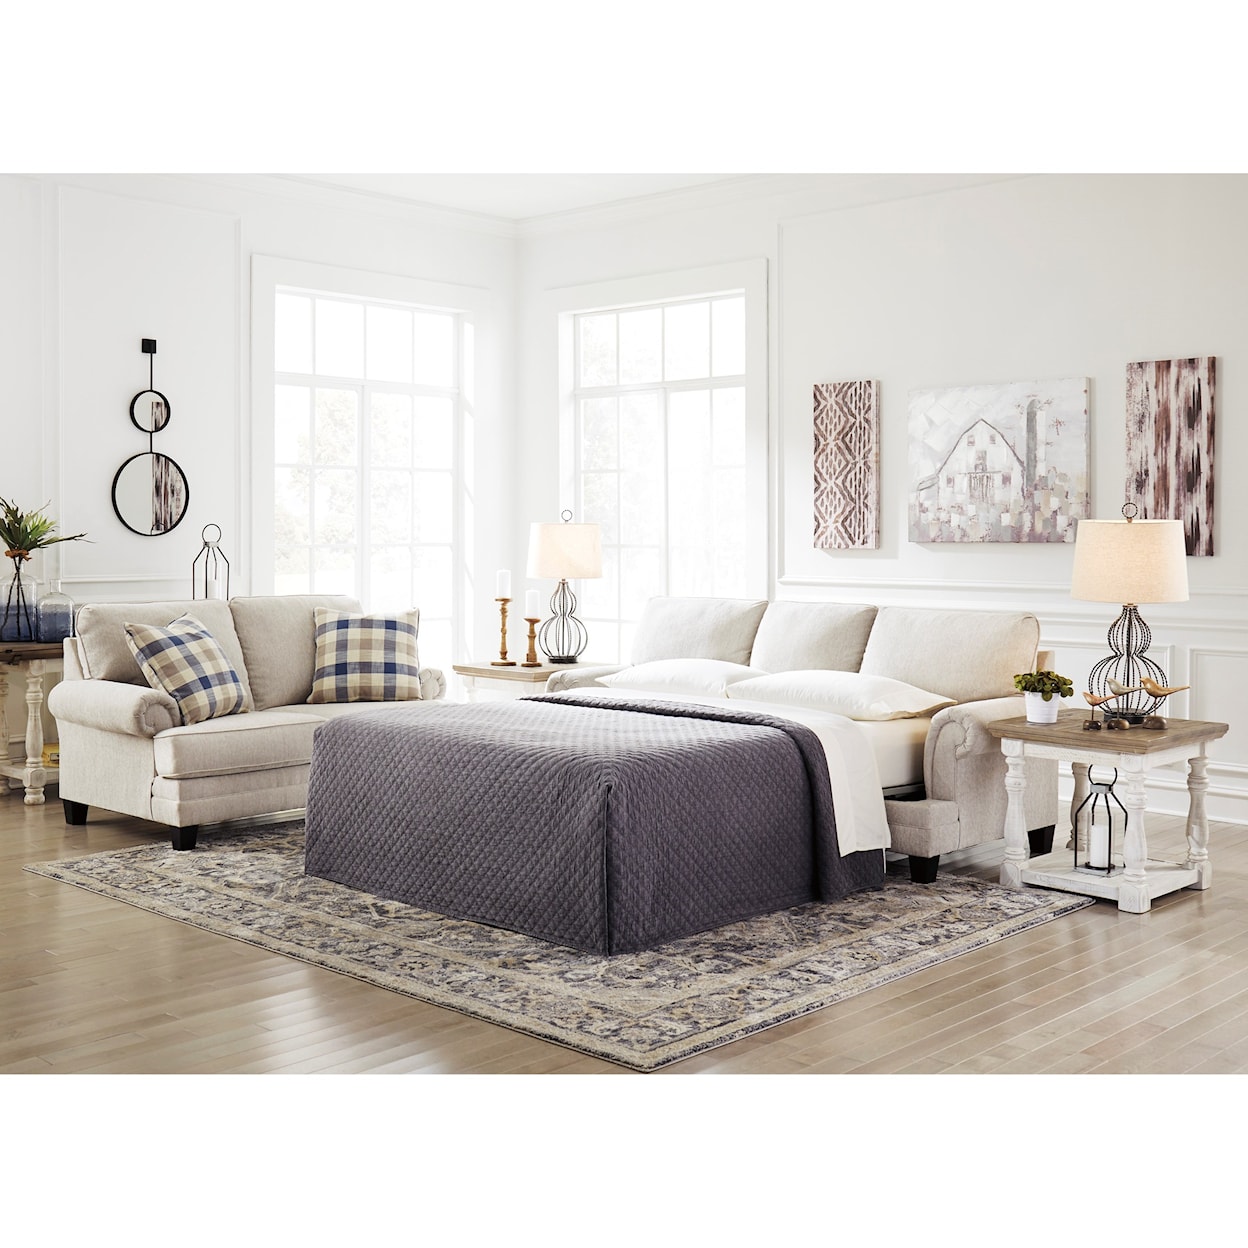 Ashley Furniture Benchcraft Meggett Living Room Set